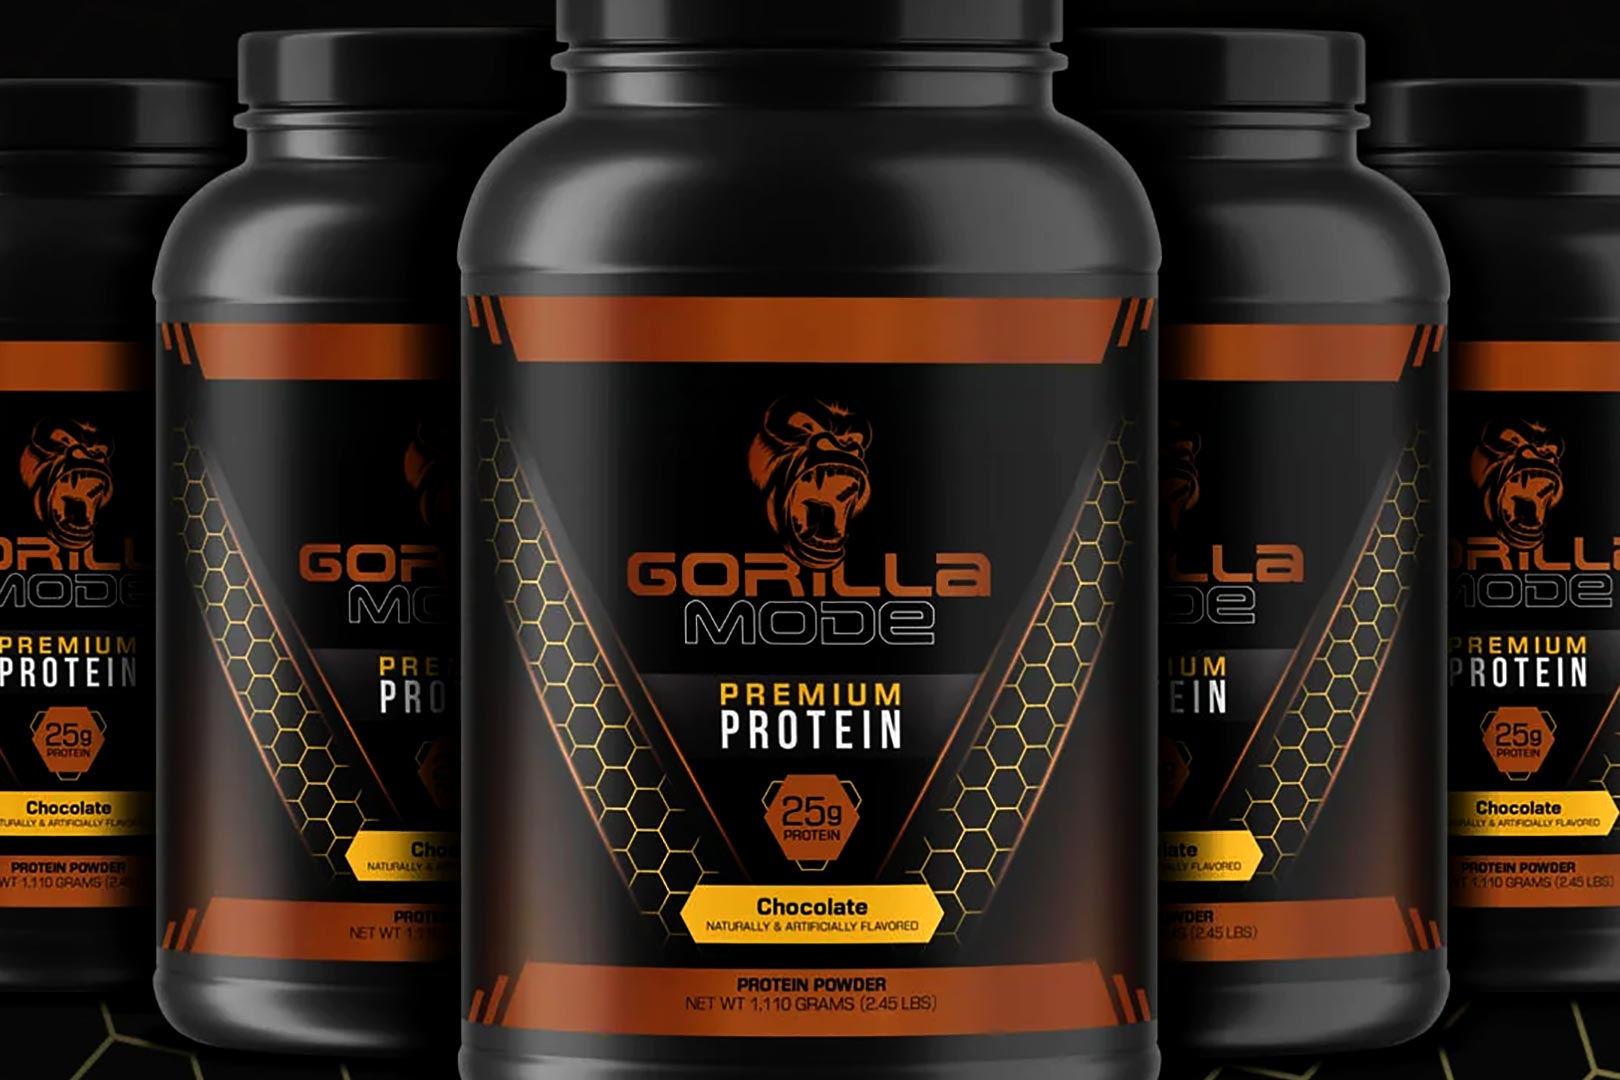 Gorilla Mind Gorilla Mode Premium Protein